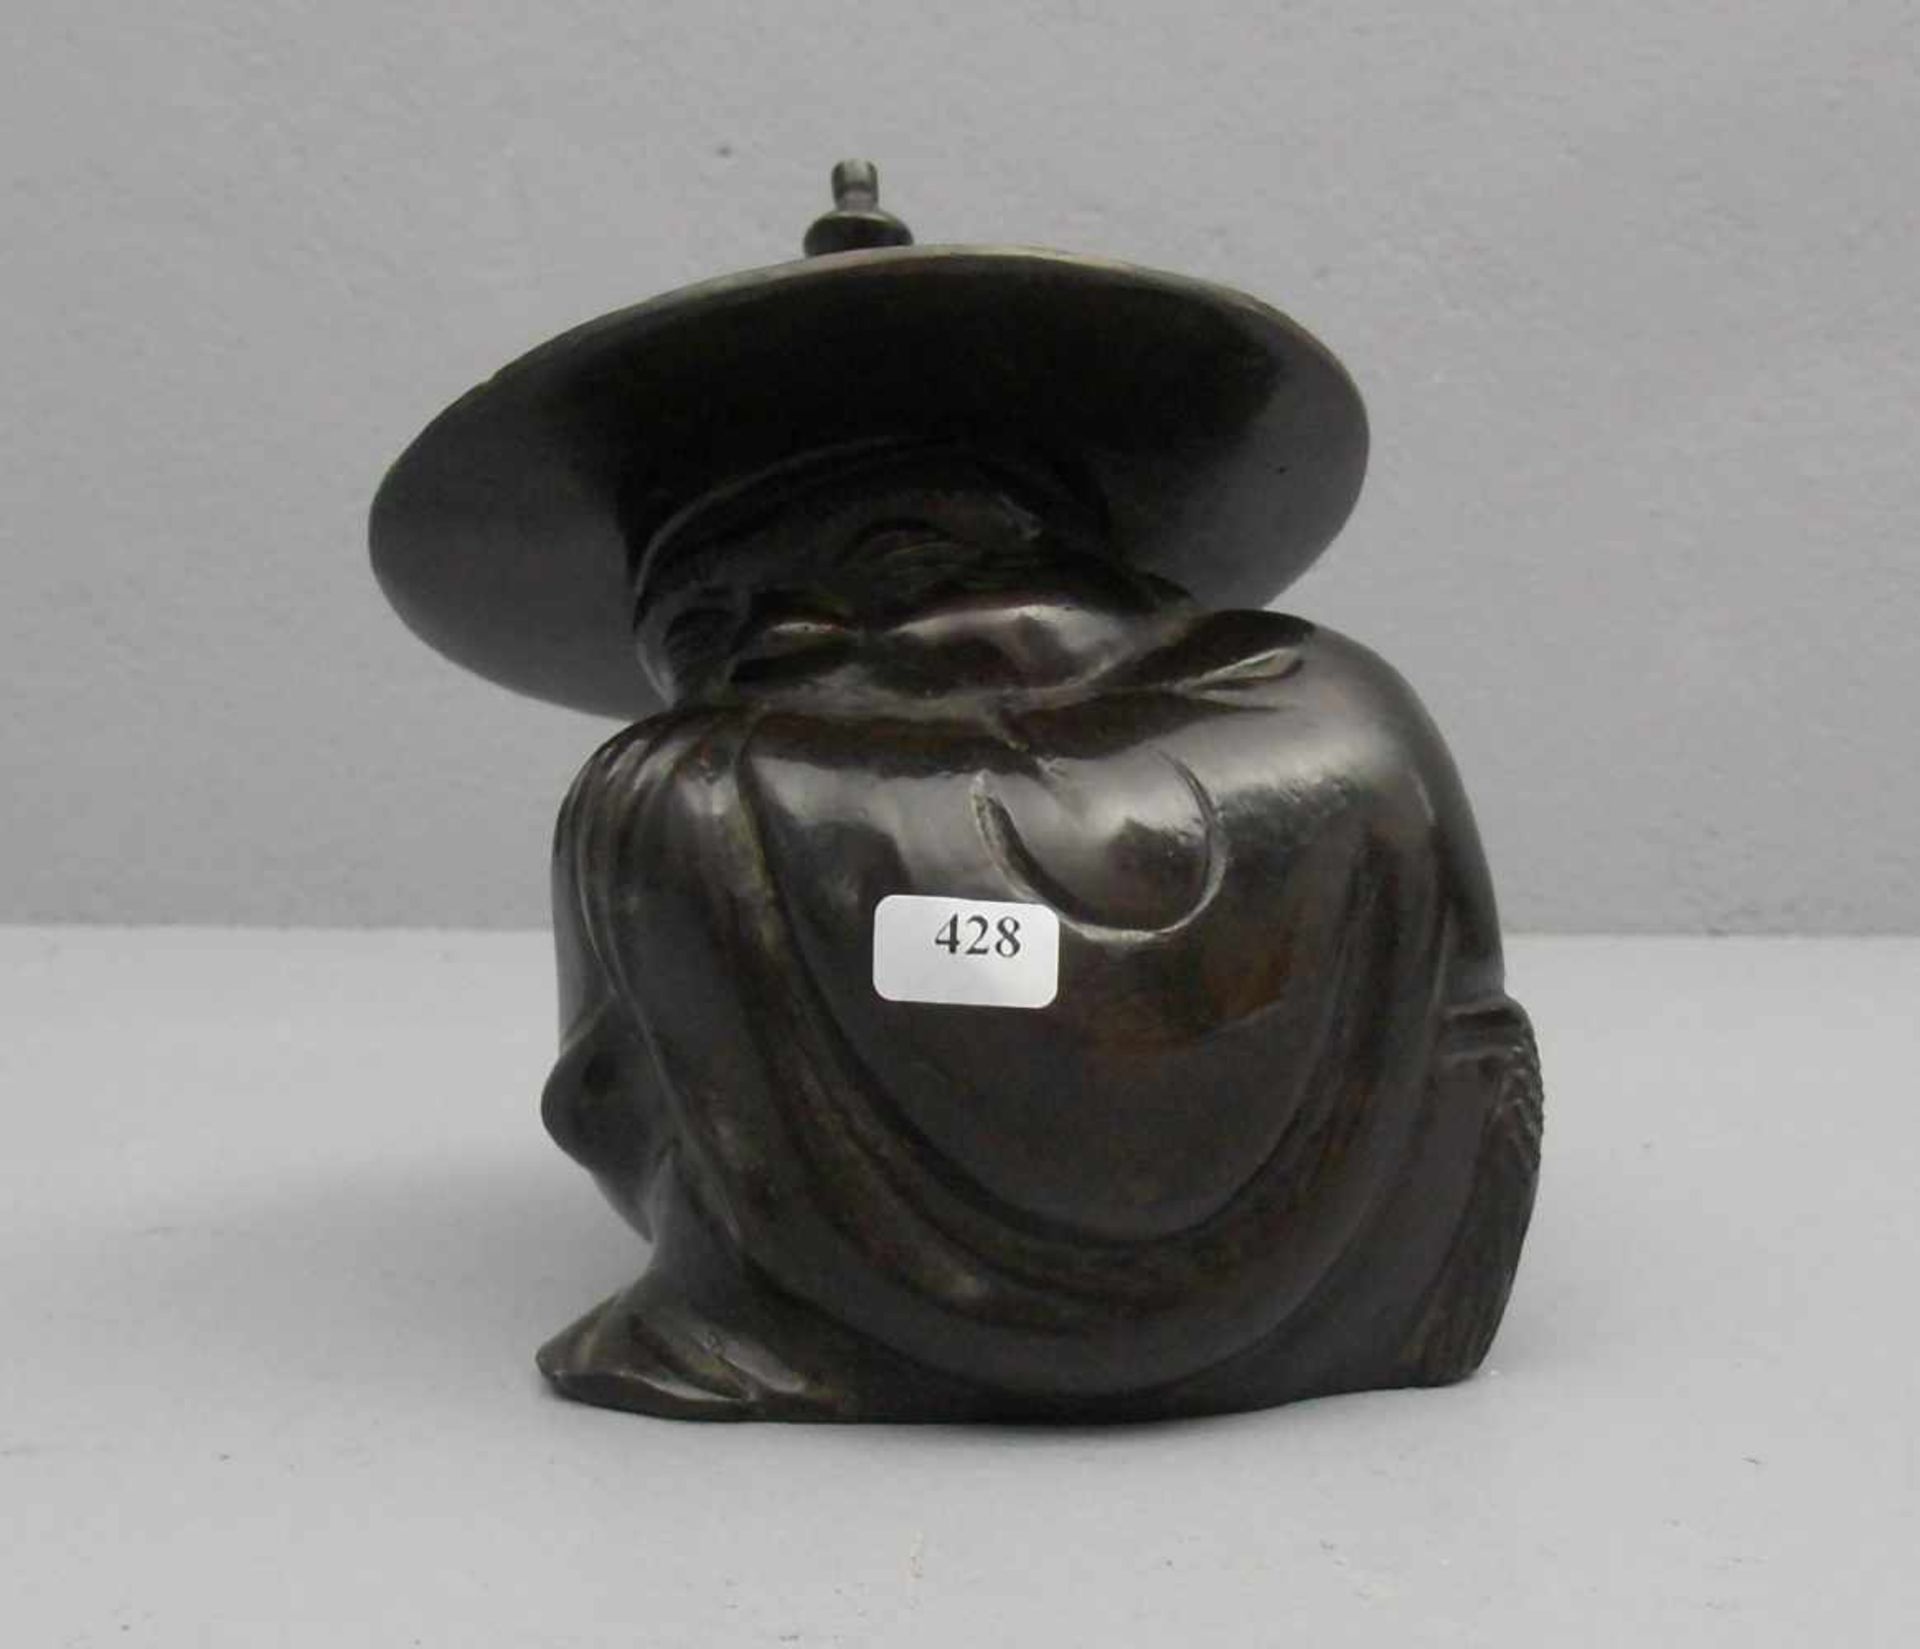 ANONYMUS (19./20. Jh.), Skulptur / sculpture: "Kauernder Chinese", Bronze, dunkelbraun patiniert.